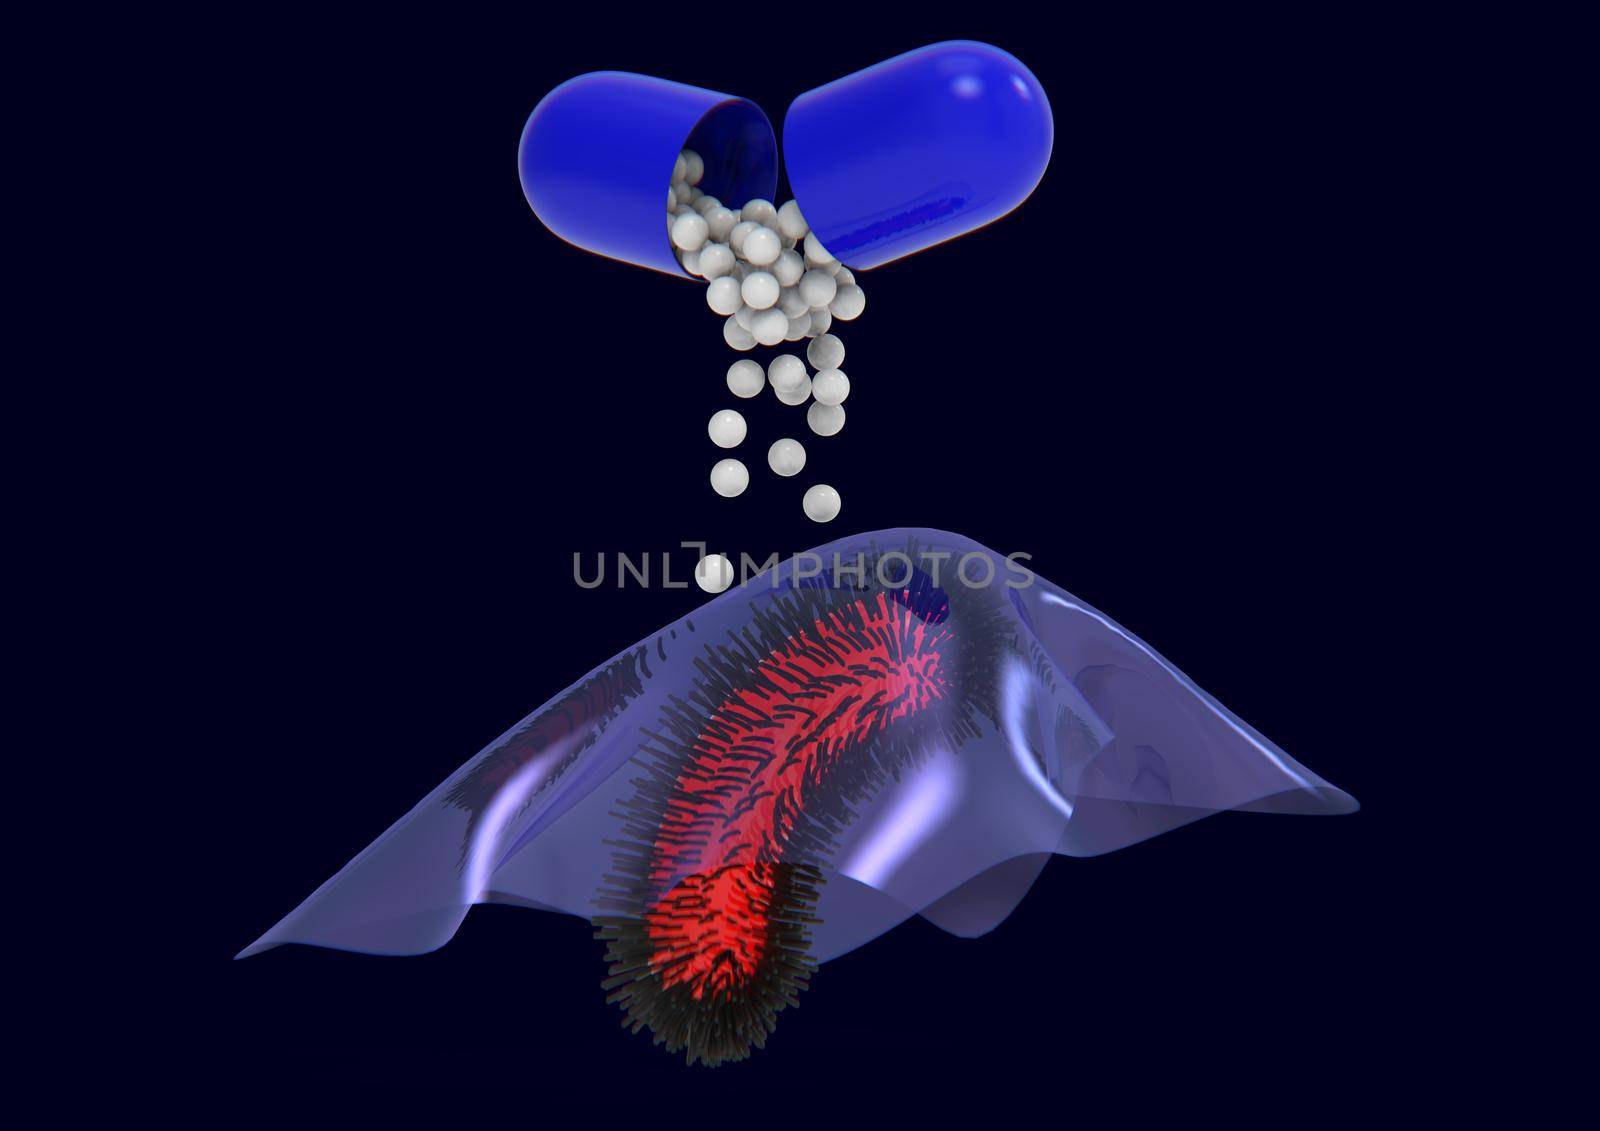 Bacterium resistant to antibiotic under biofilm. Medical 3D rendering illustration by clusterx